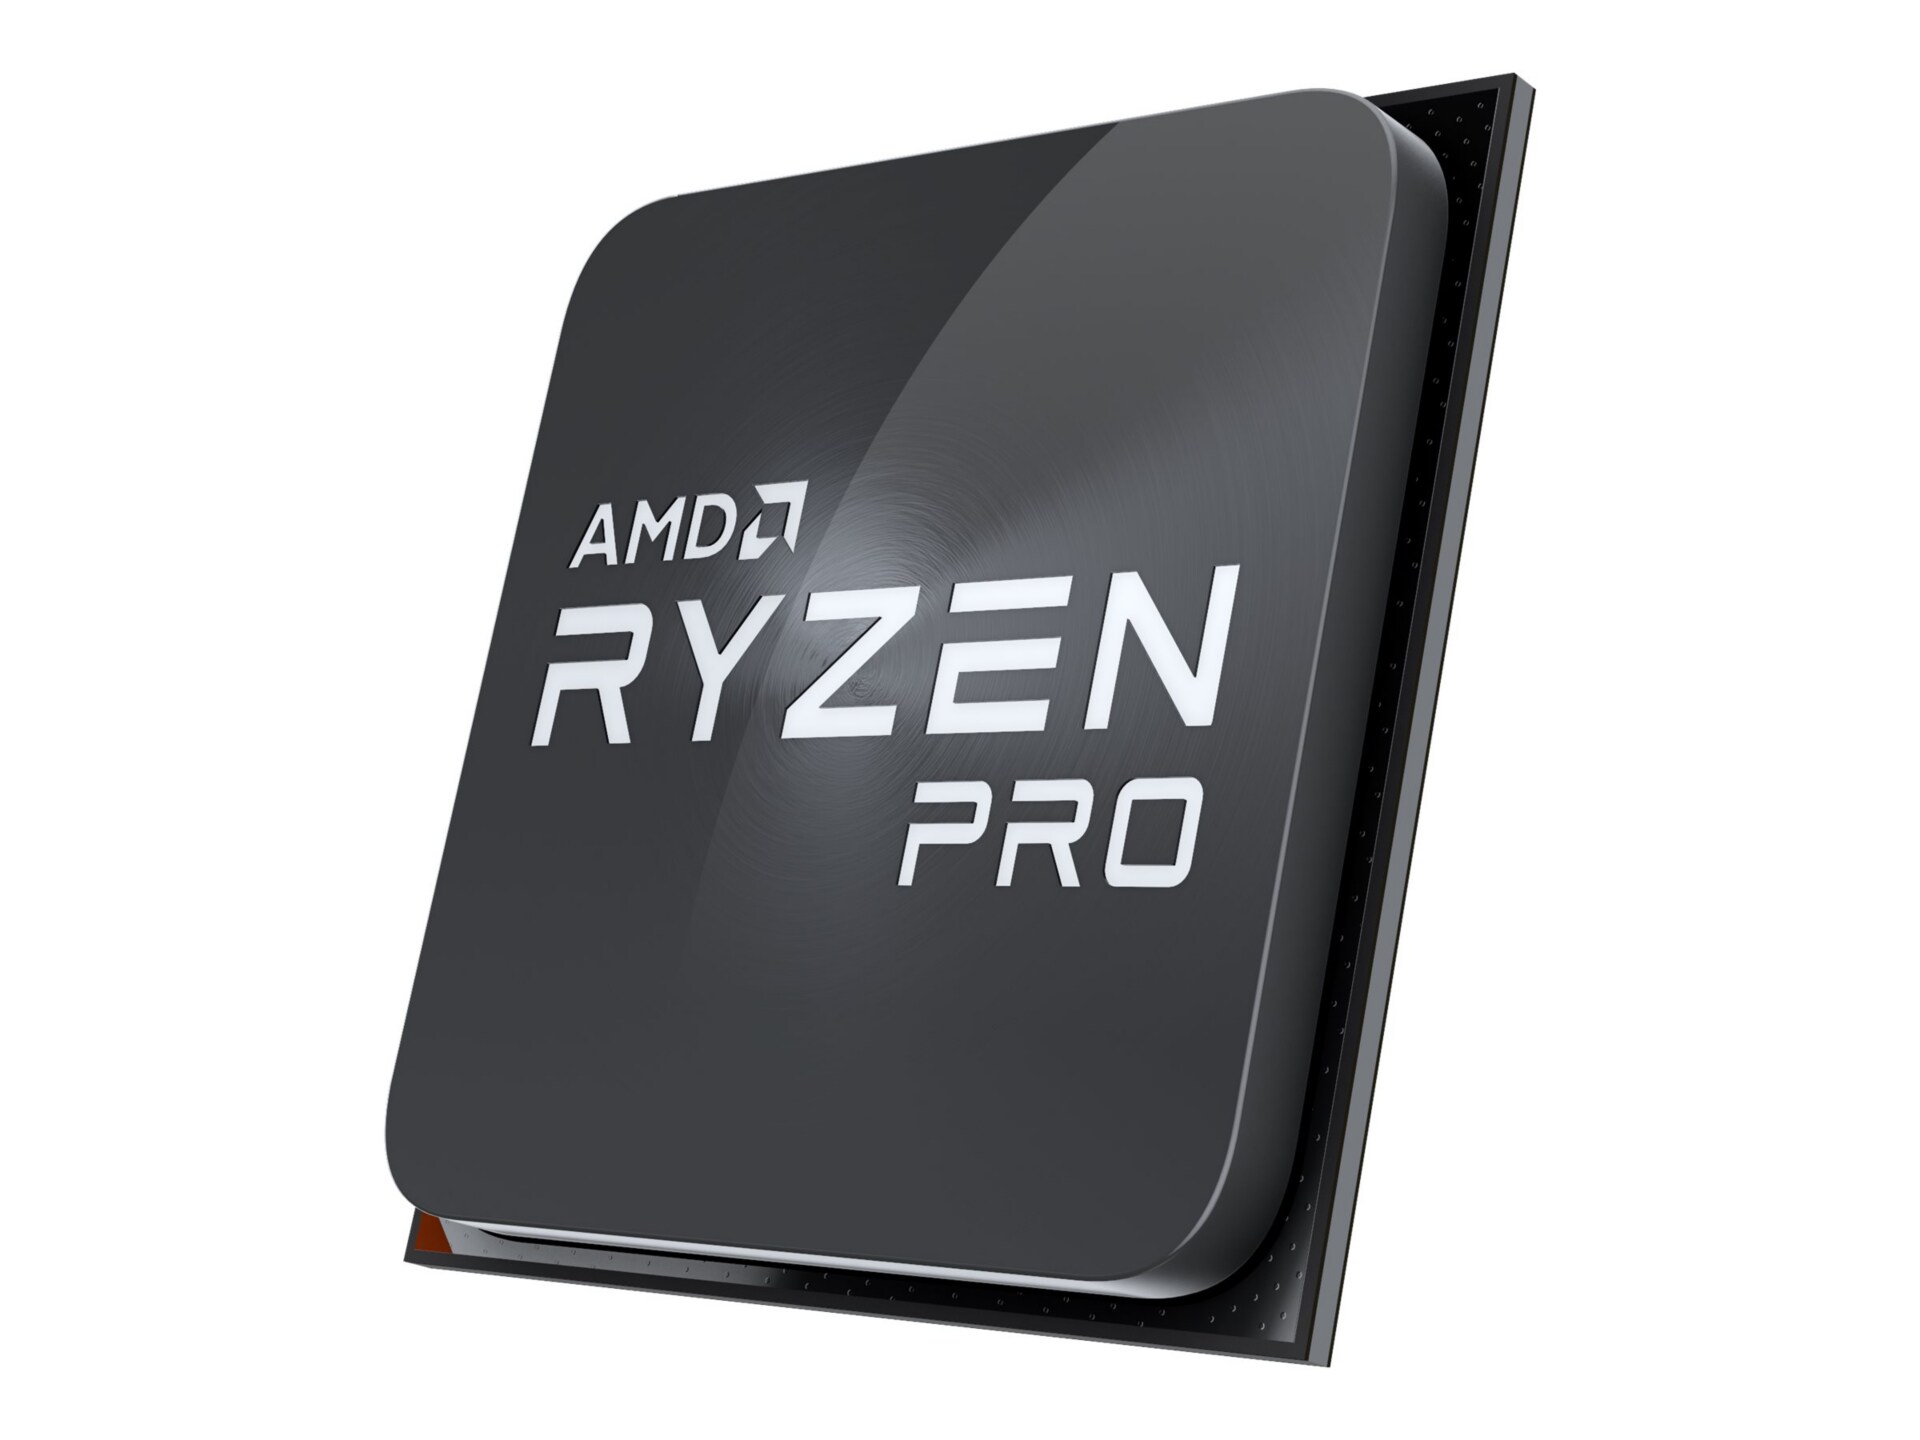 AMD Ryzen 3 Pro 2200G / 3.5 GHz processor